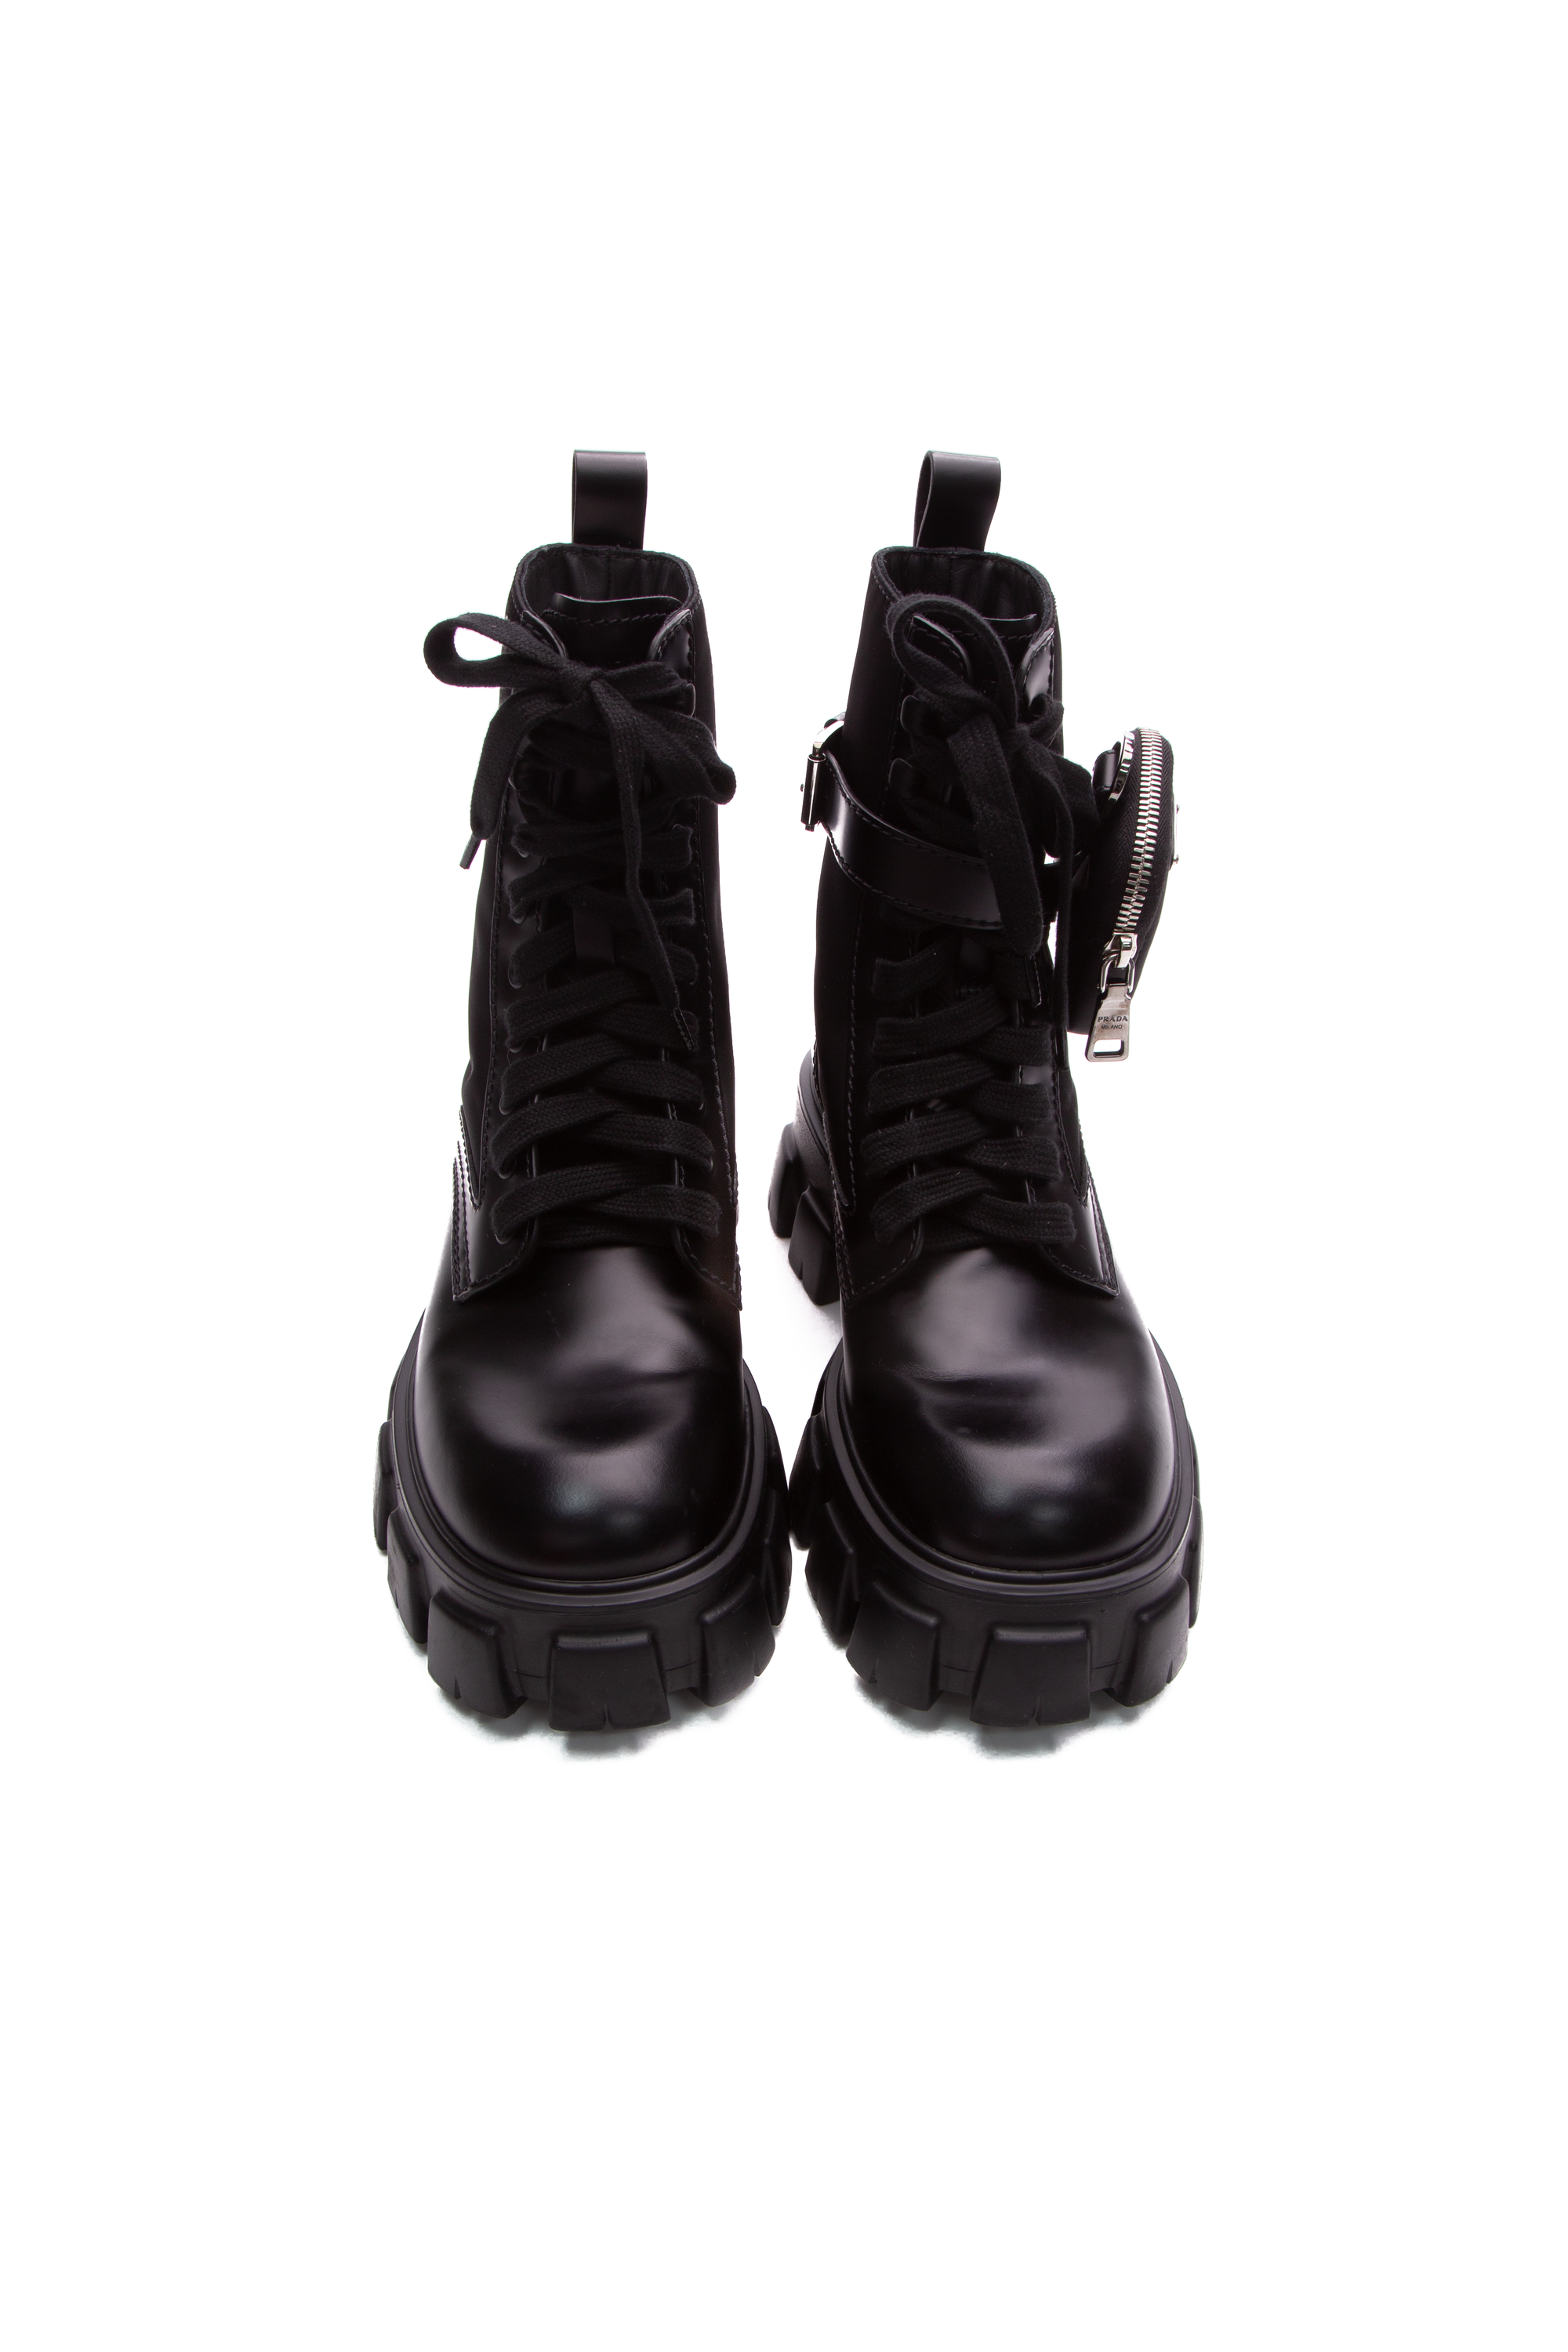 Prada Black Mens Monolith Boots